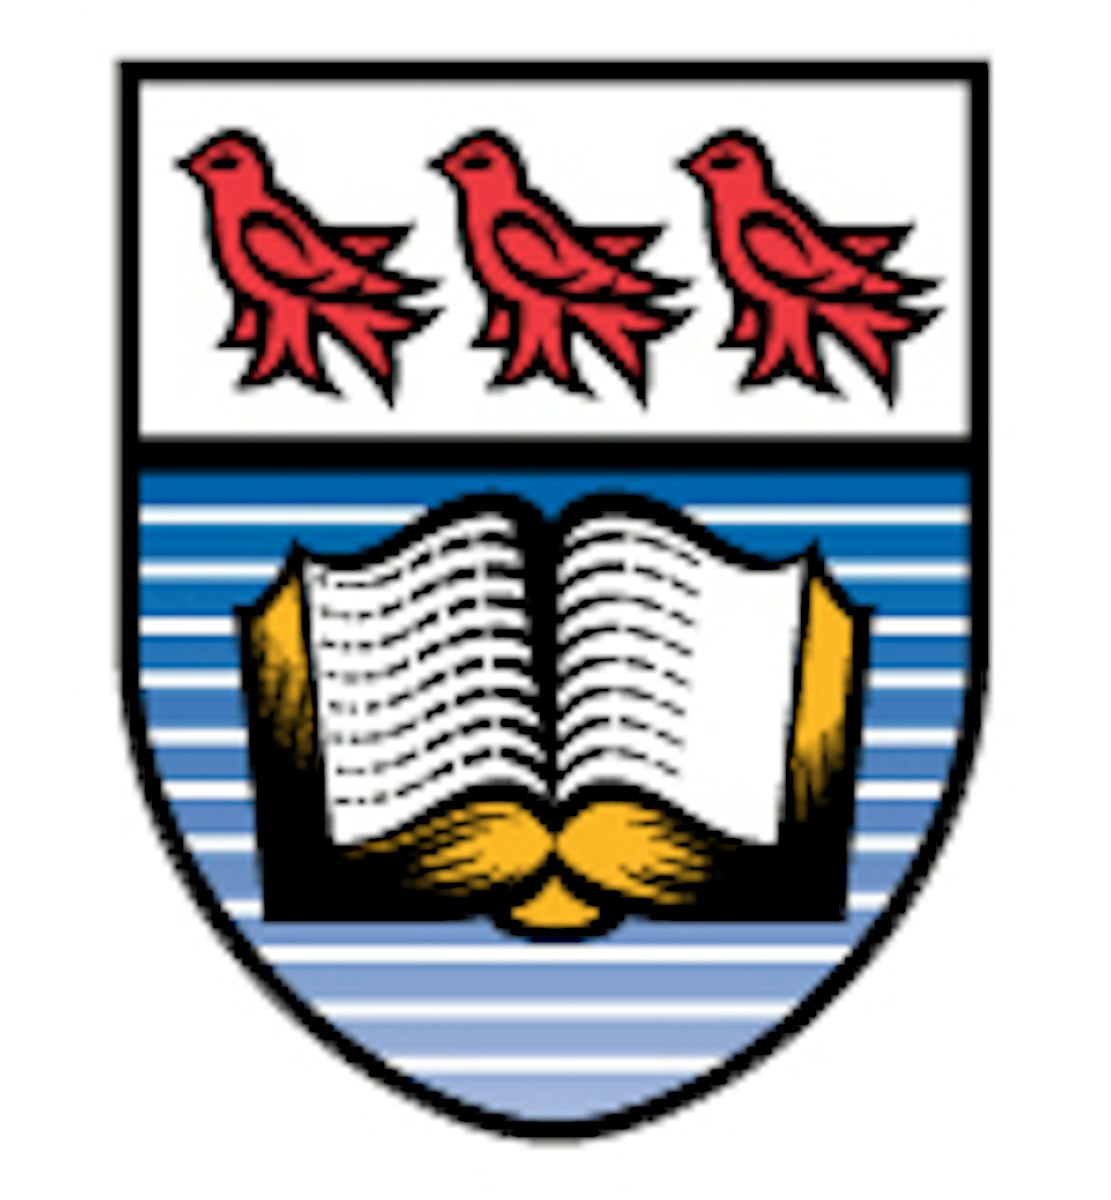 University of Victoria Libraries